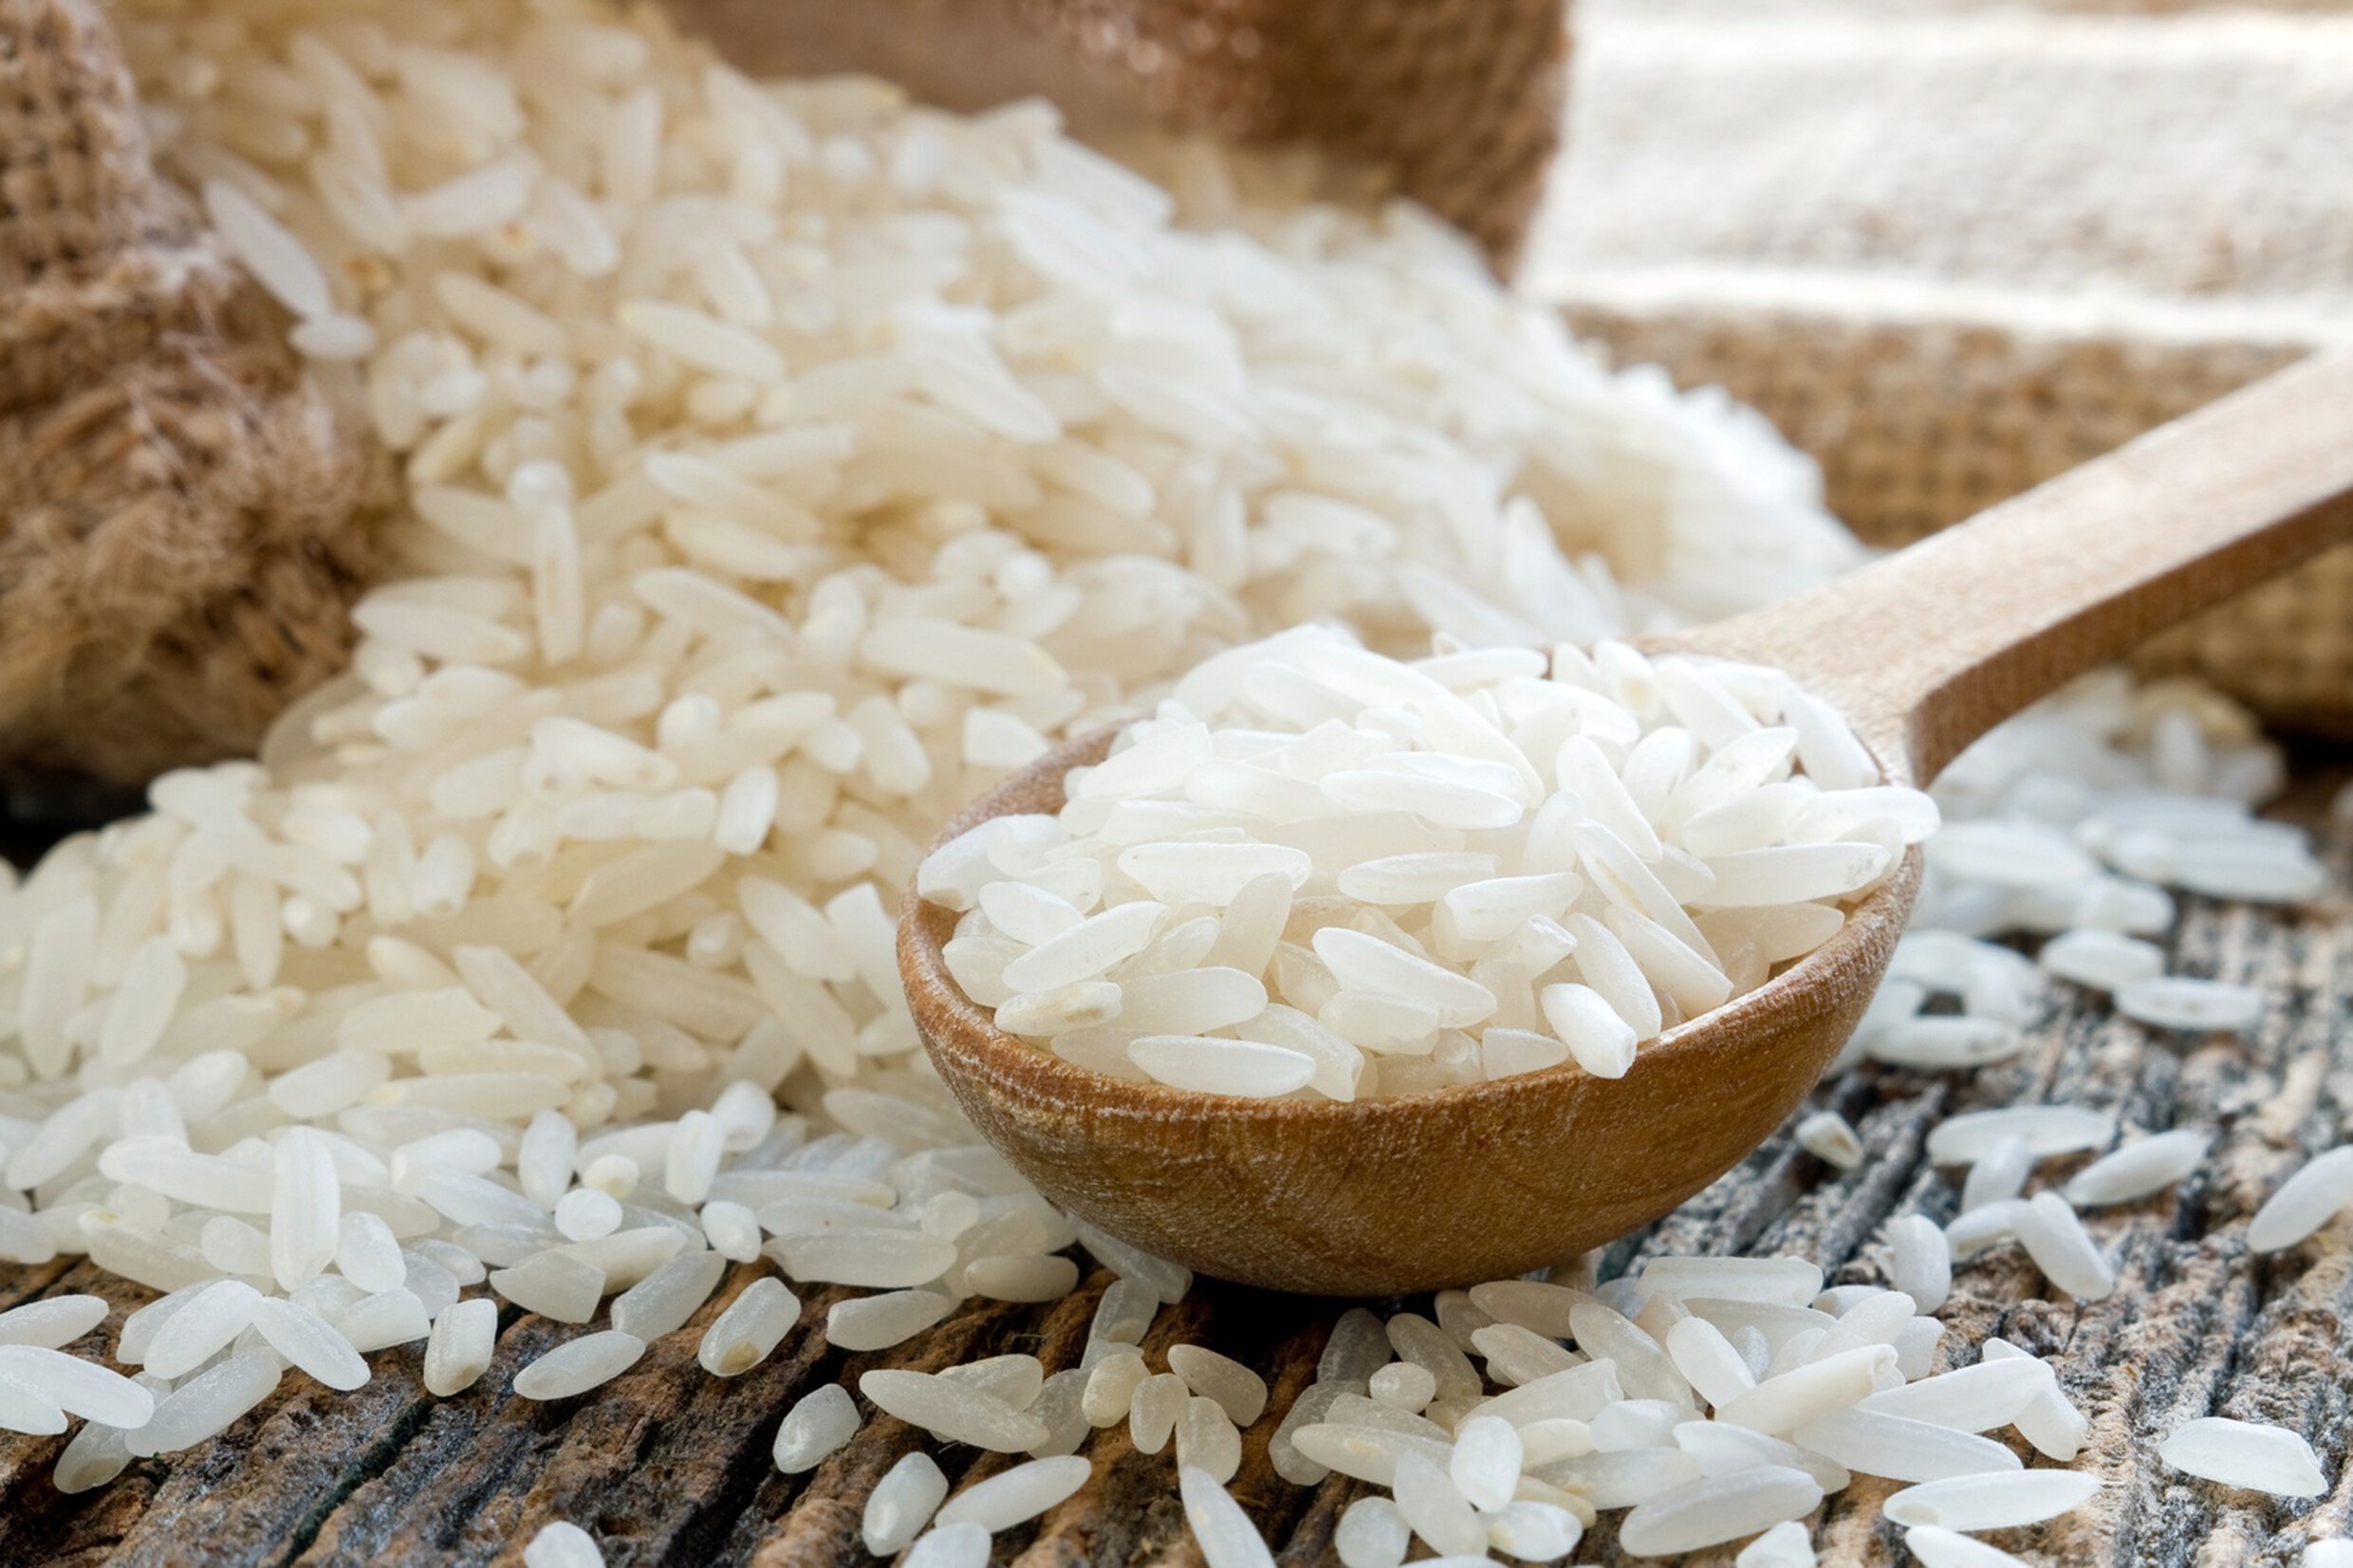 Производство риса сокращается, а цена растет